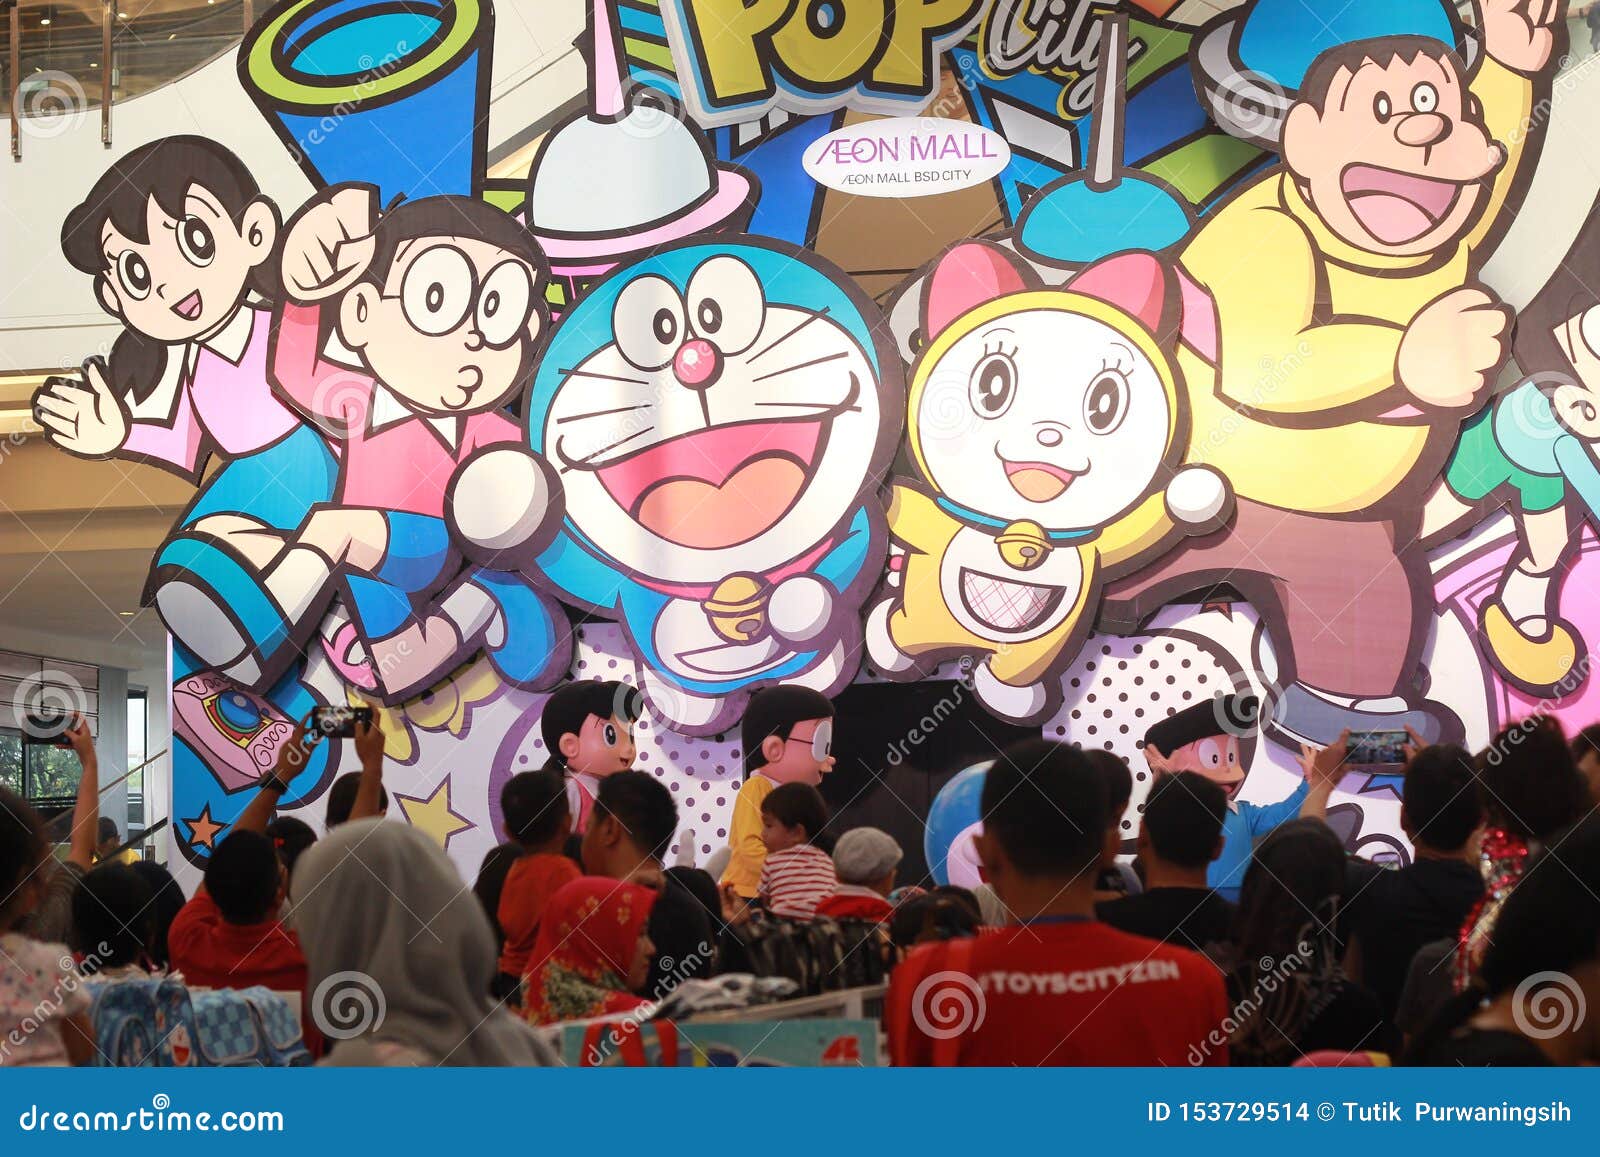 Top View, 23 June 2019, Doraemon, Nobi Nobita, Takeshi Goda or Giant,  Shizuka Minamoto, Suneo Honekawa Cartoon Character at AEON Editorial Stock  Image - Image of nobita, giant: 153729514